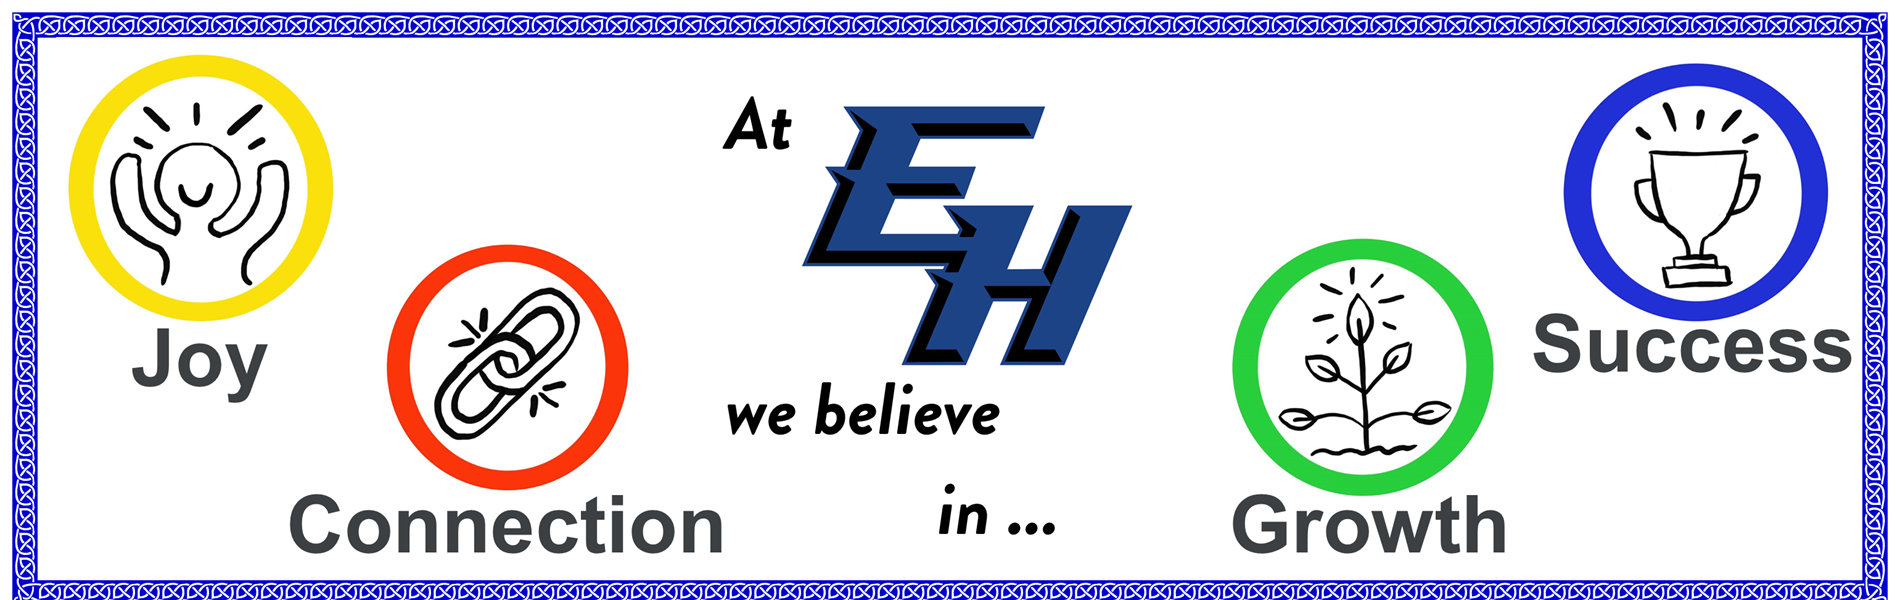 EH Vision Symbols
